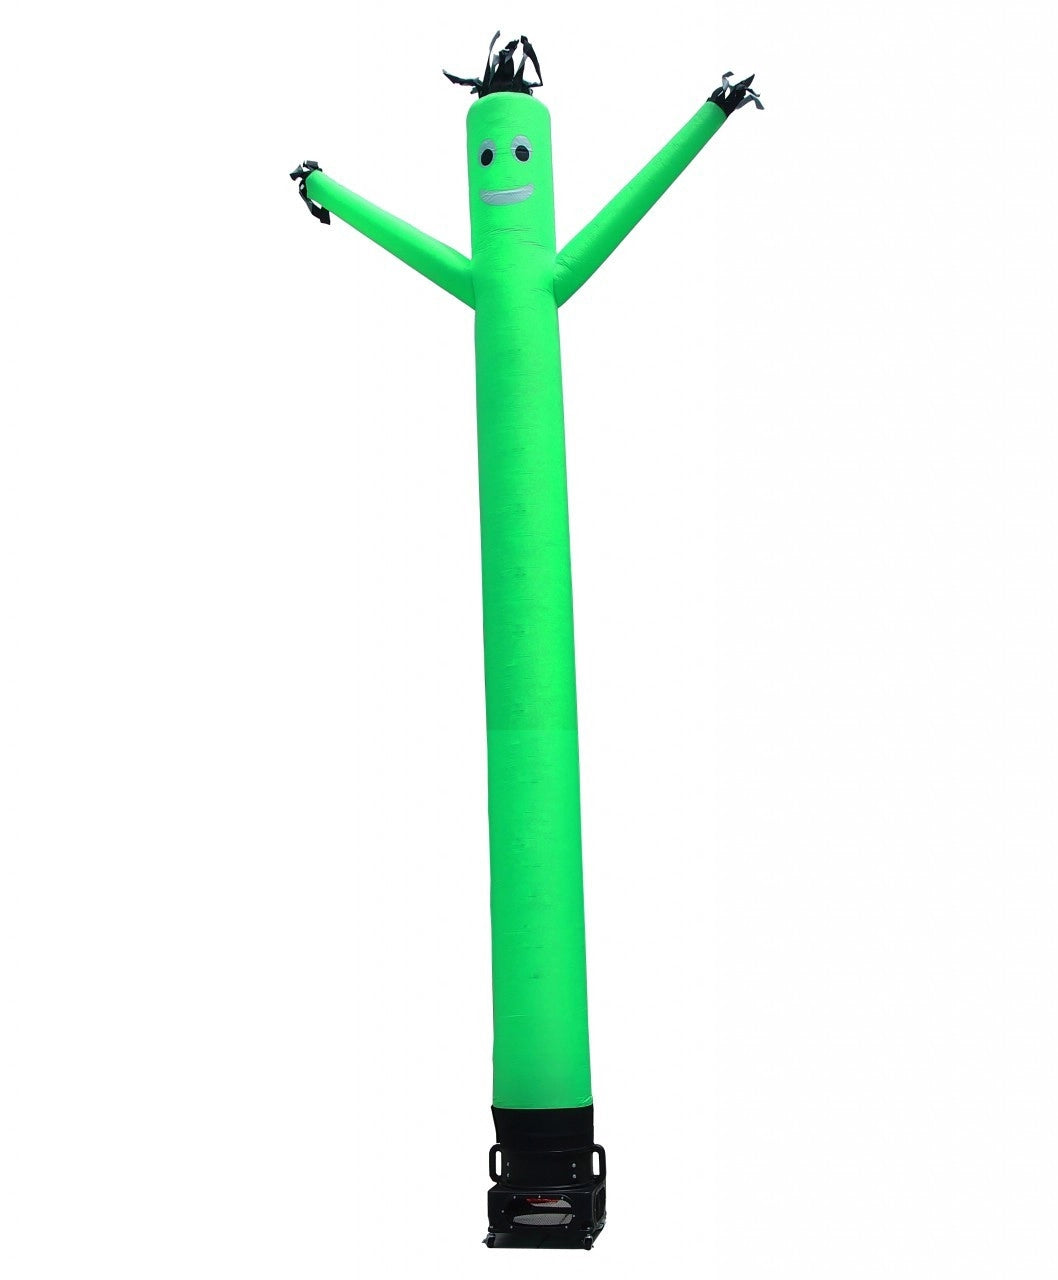 Custom 20ft Air Dancer Inflatable Tube Man Wacky Wavy Man